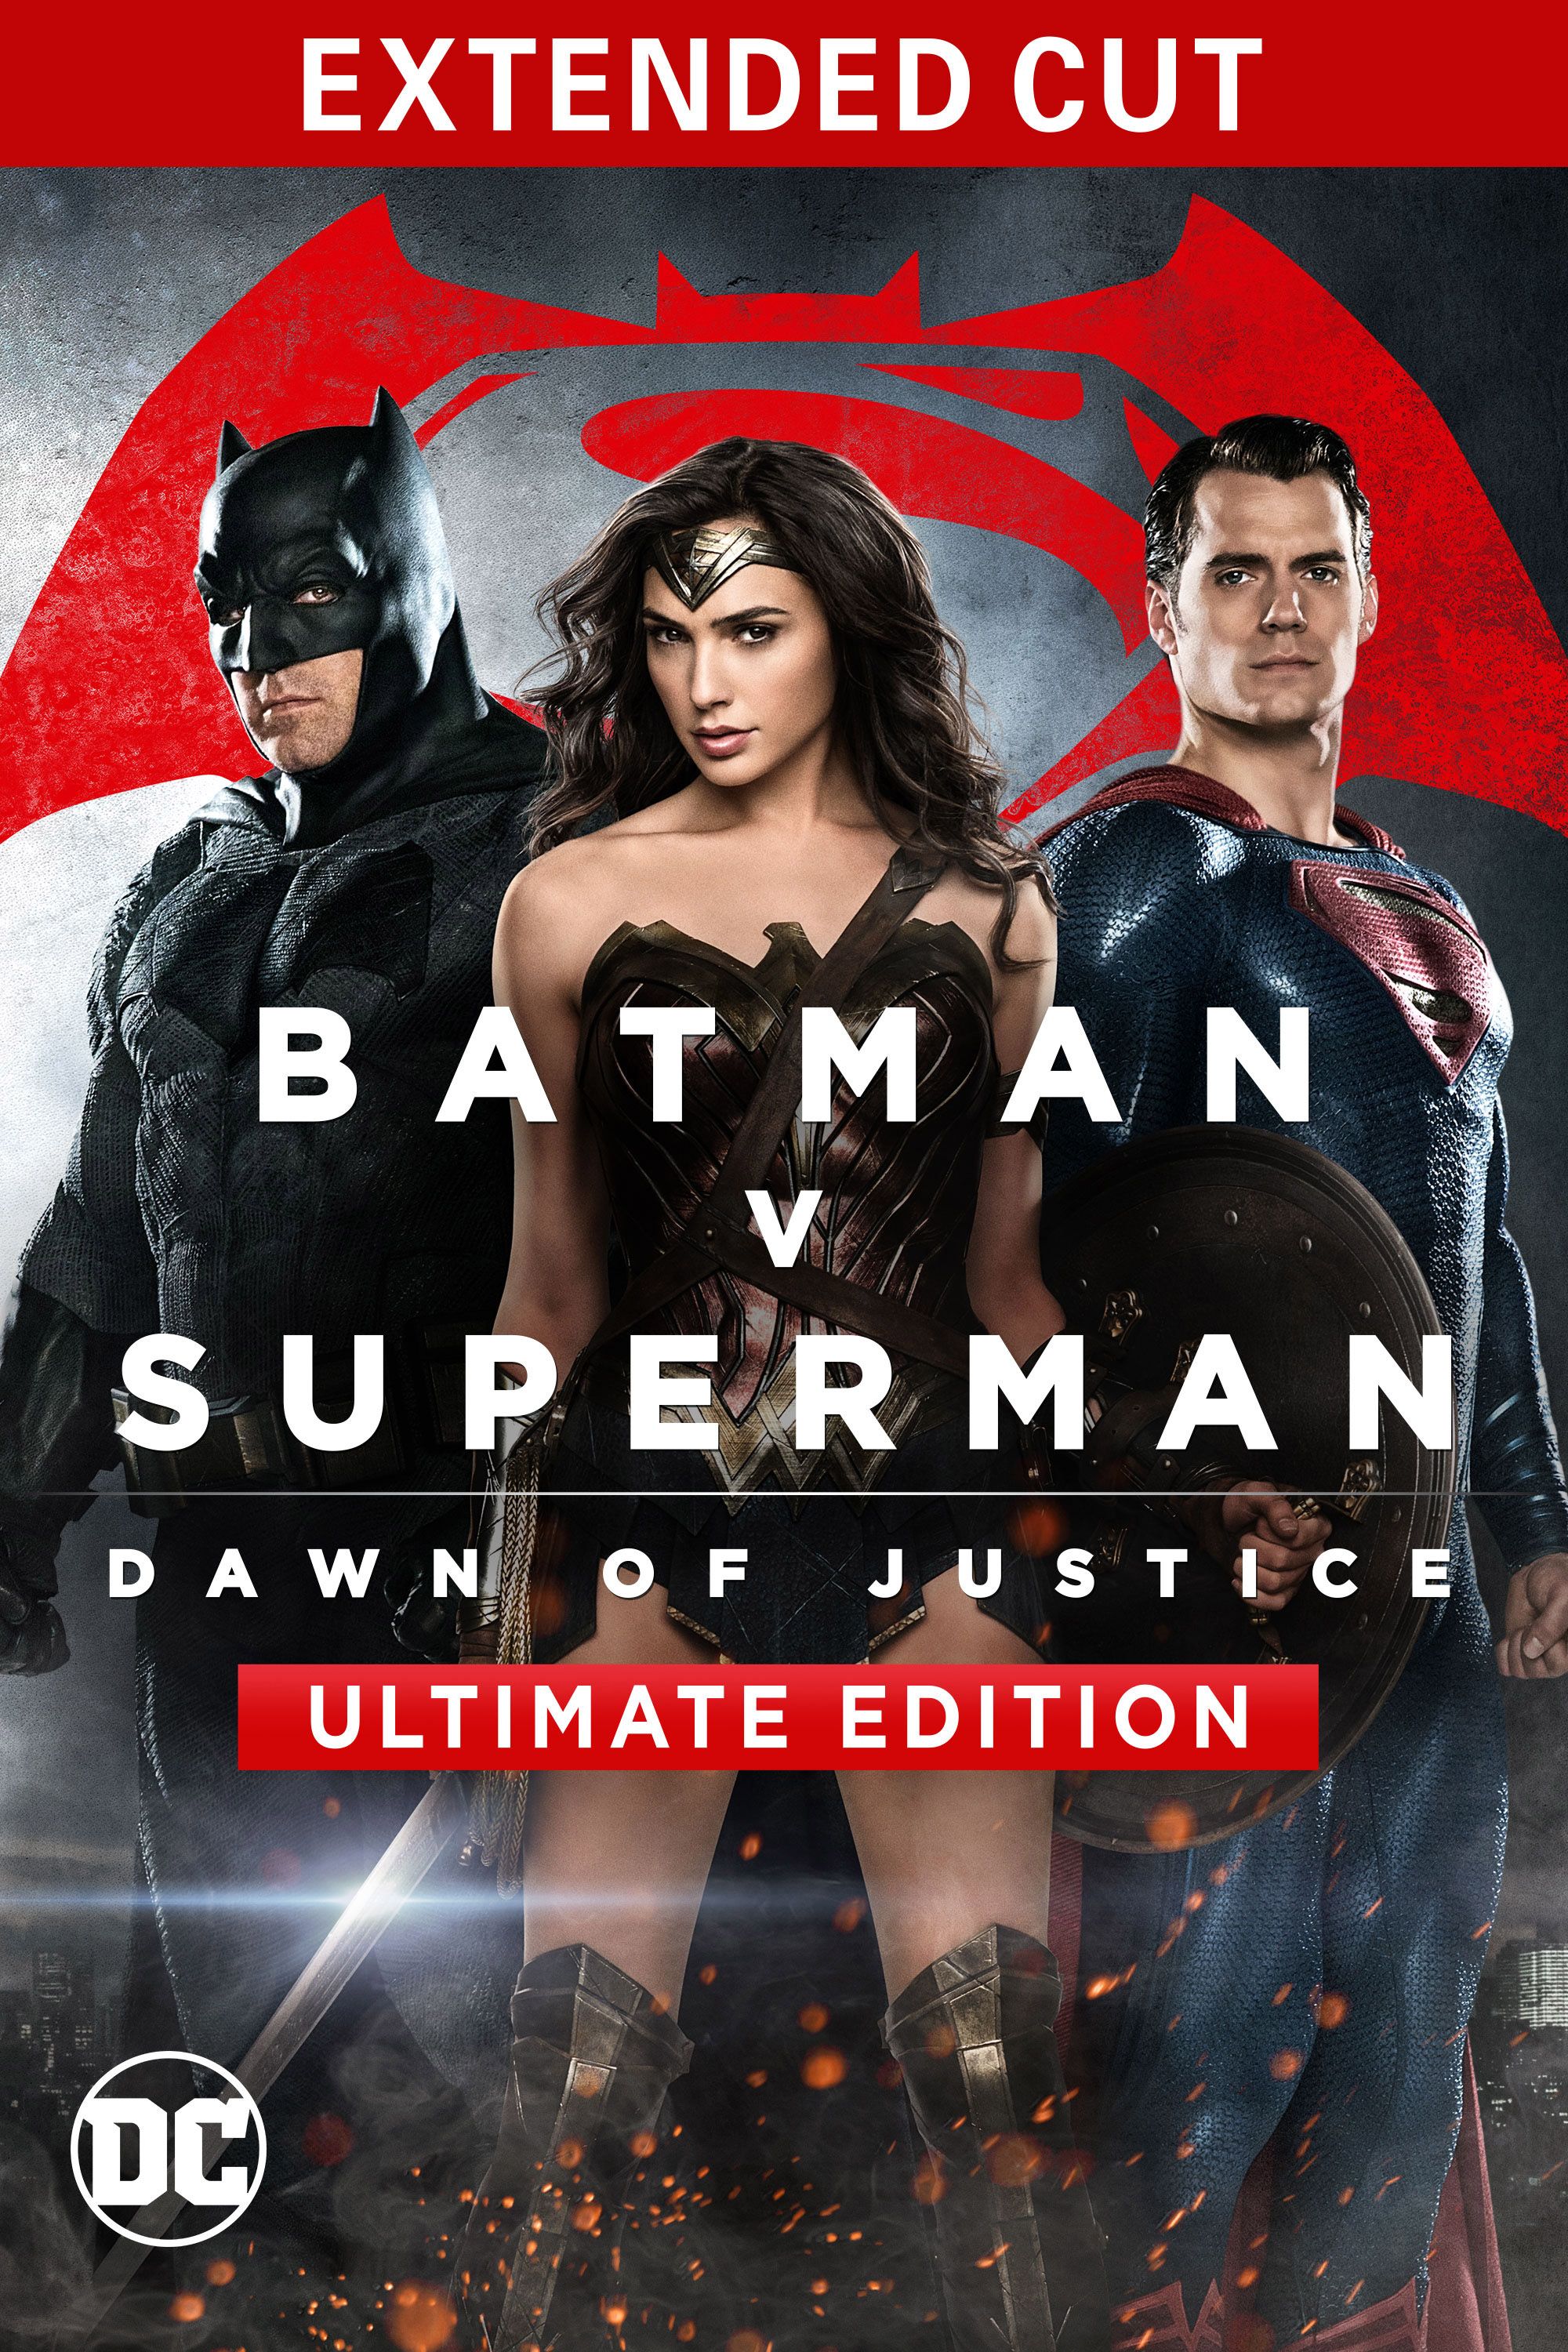 Arriba 36+ imagen ver batman vs superman ultimate edition